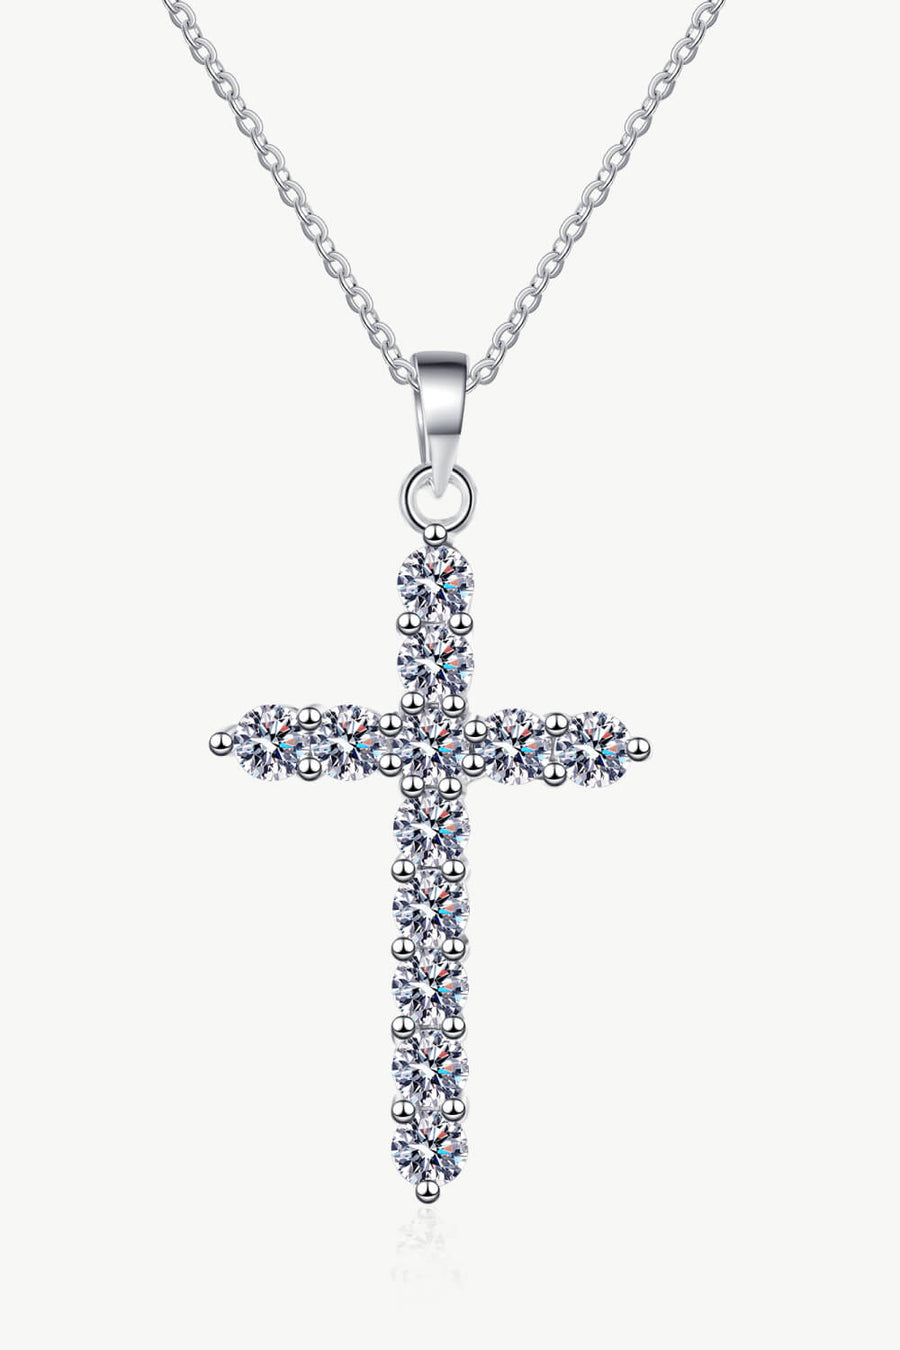 Best Diamond Necklace Jewelry Gifts for Women | 0.72 Carat Diamond Cross Pendant Necklace | MASON New York